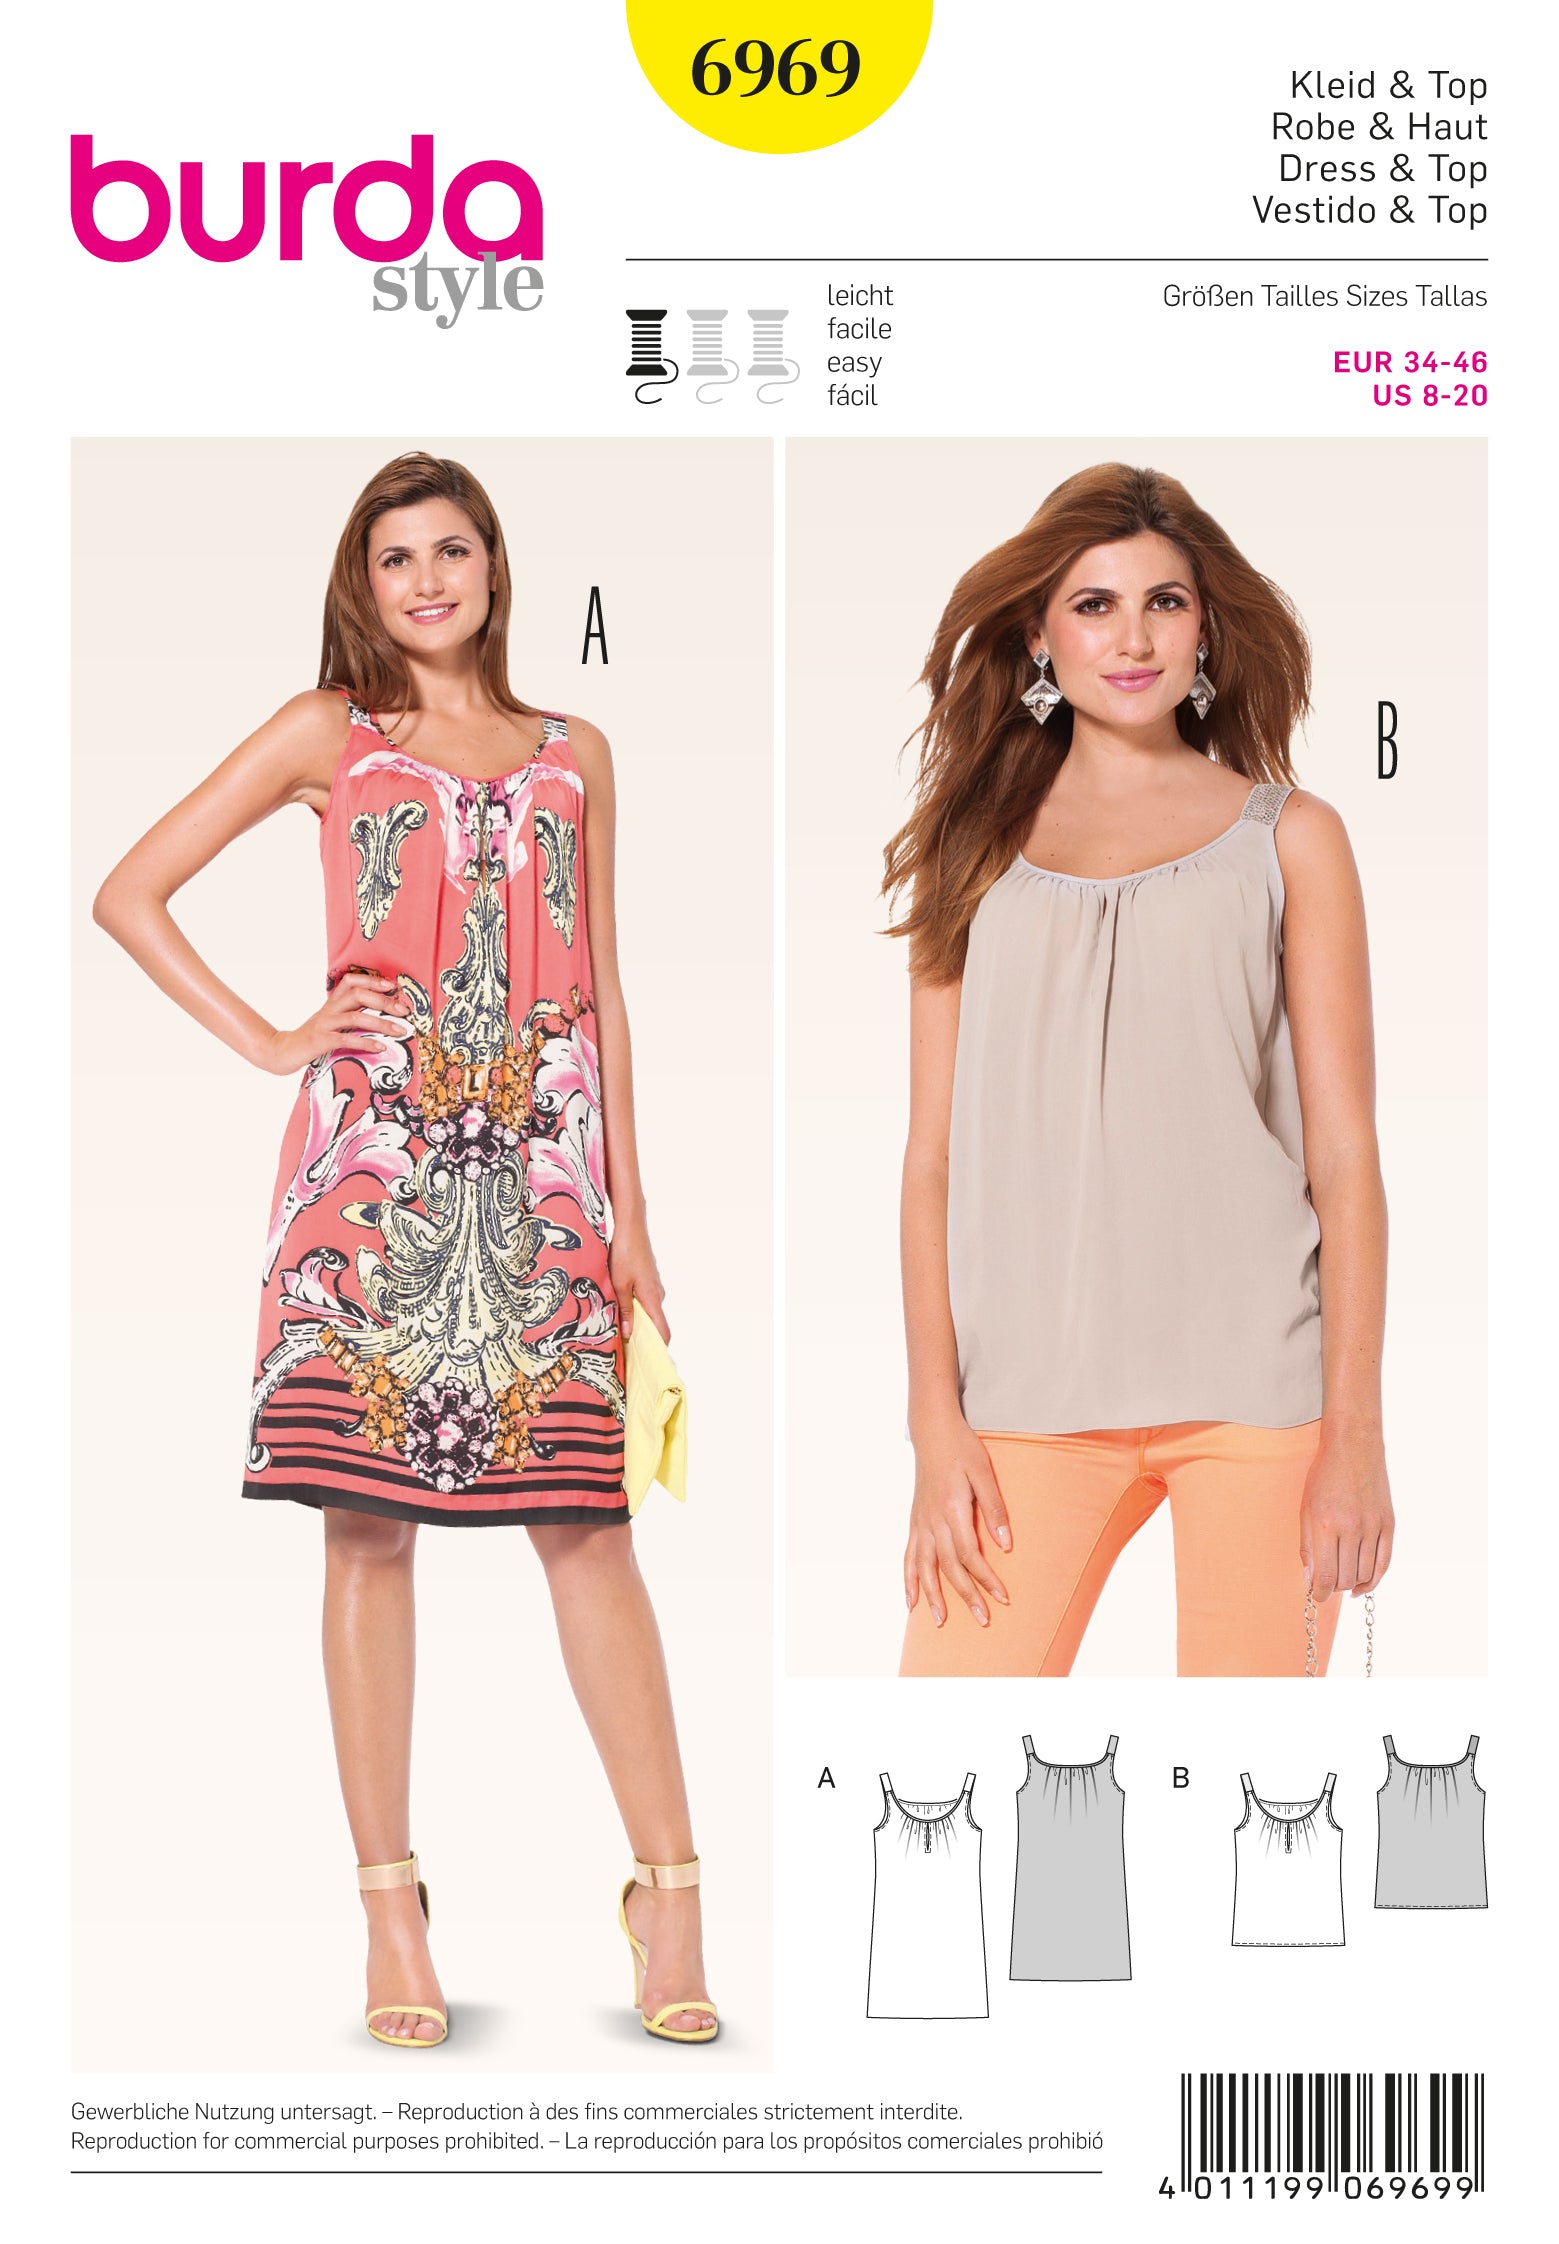 Burda Dress and Top 6969